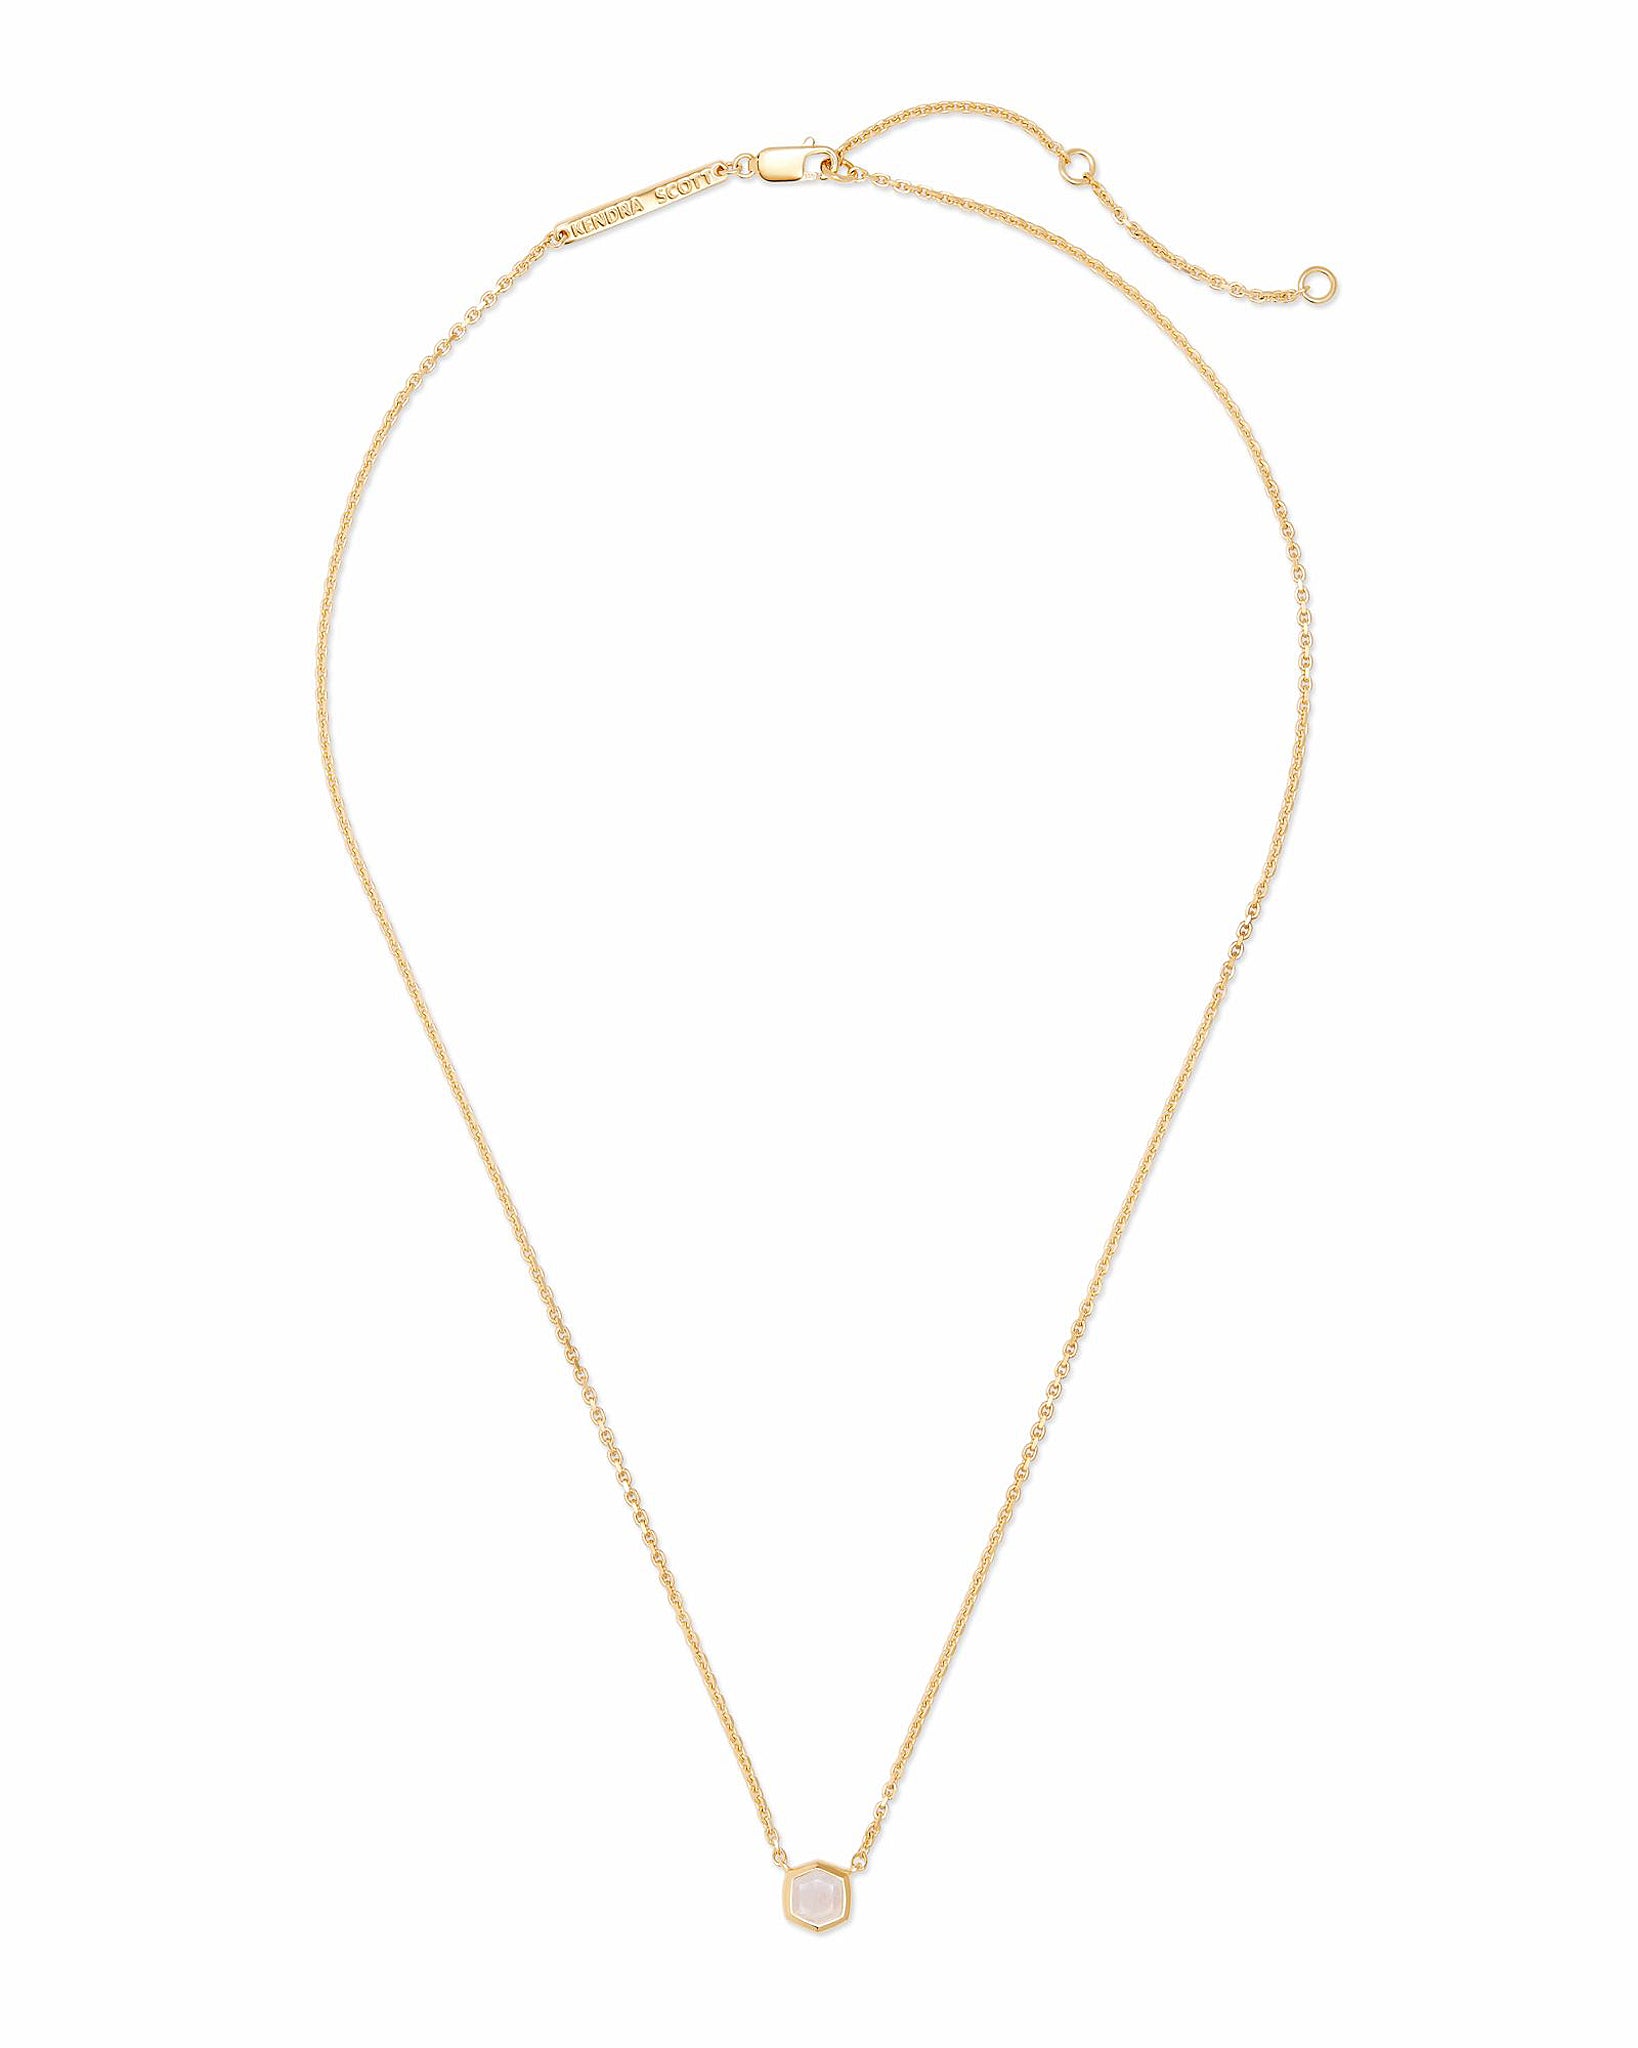 Kendra Scott Davie Pendant Necklace in Rainbow Moonstone and 18k Gold Vermeil